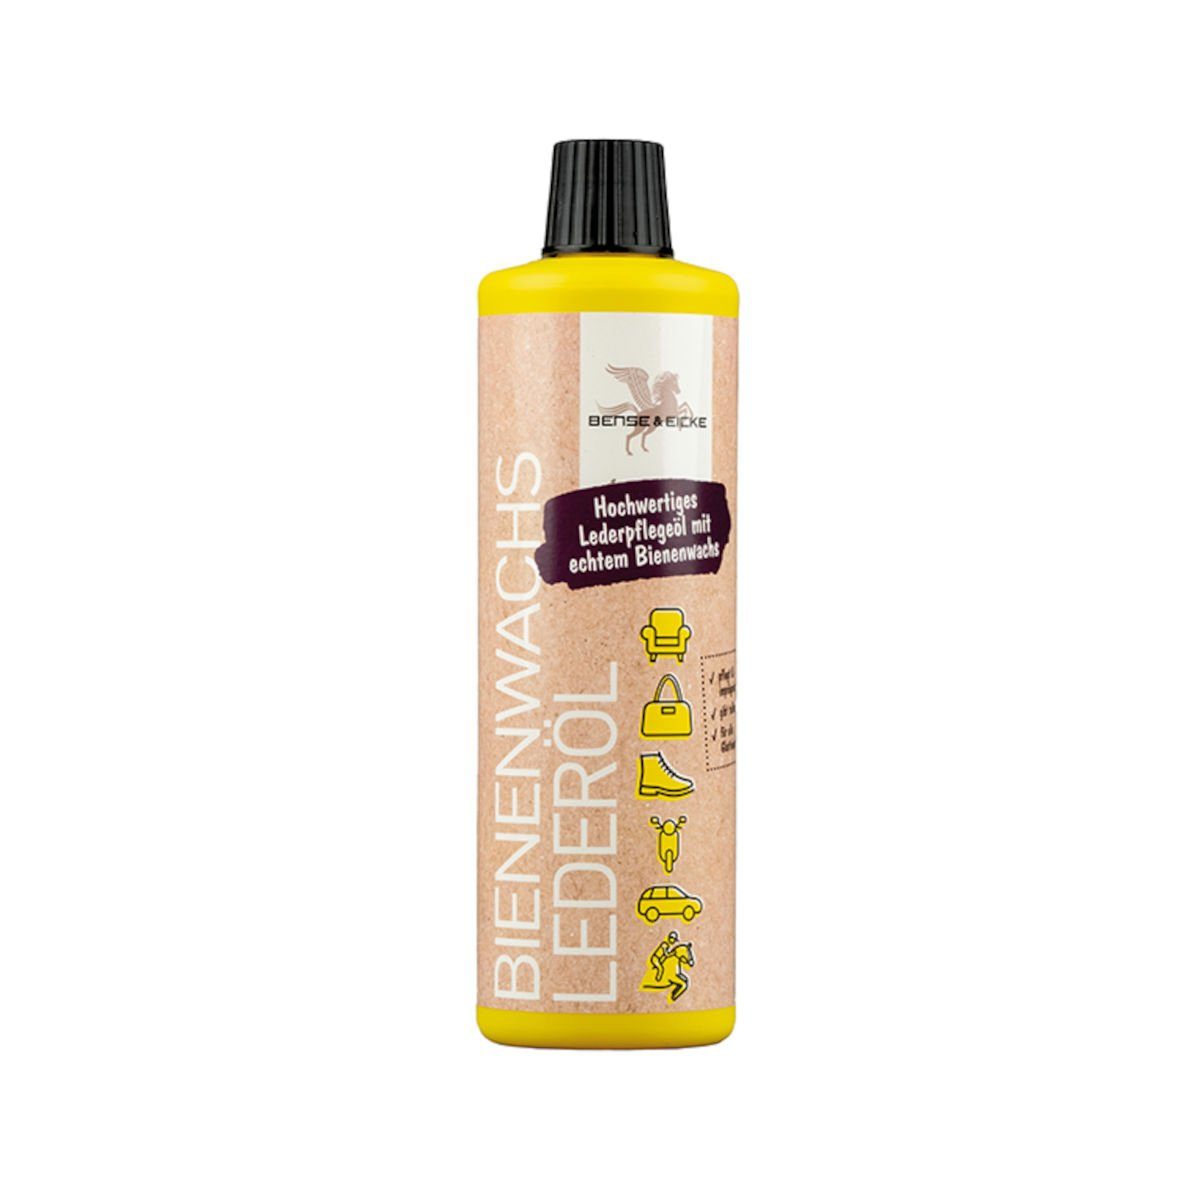 Bense ml (Packung) Lederöl Bienenwachs-Lederpflegeöl Eicke & - 500